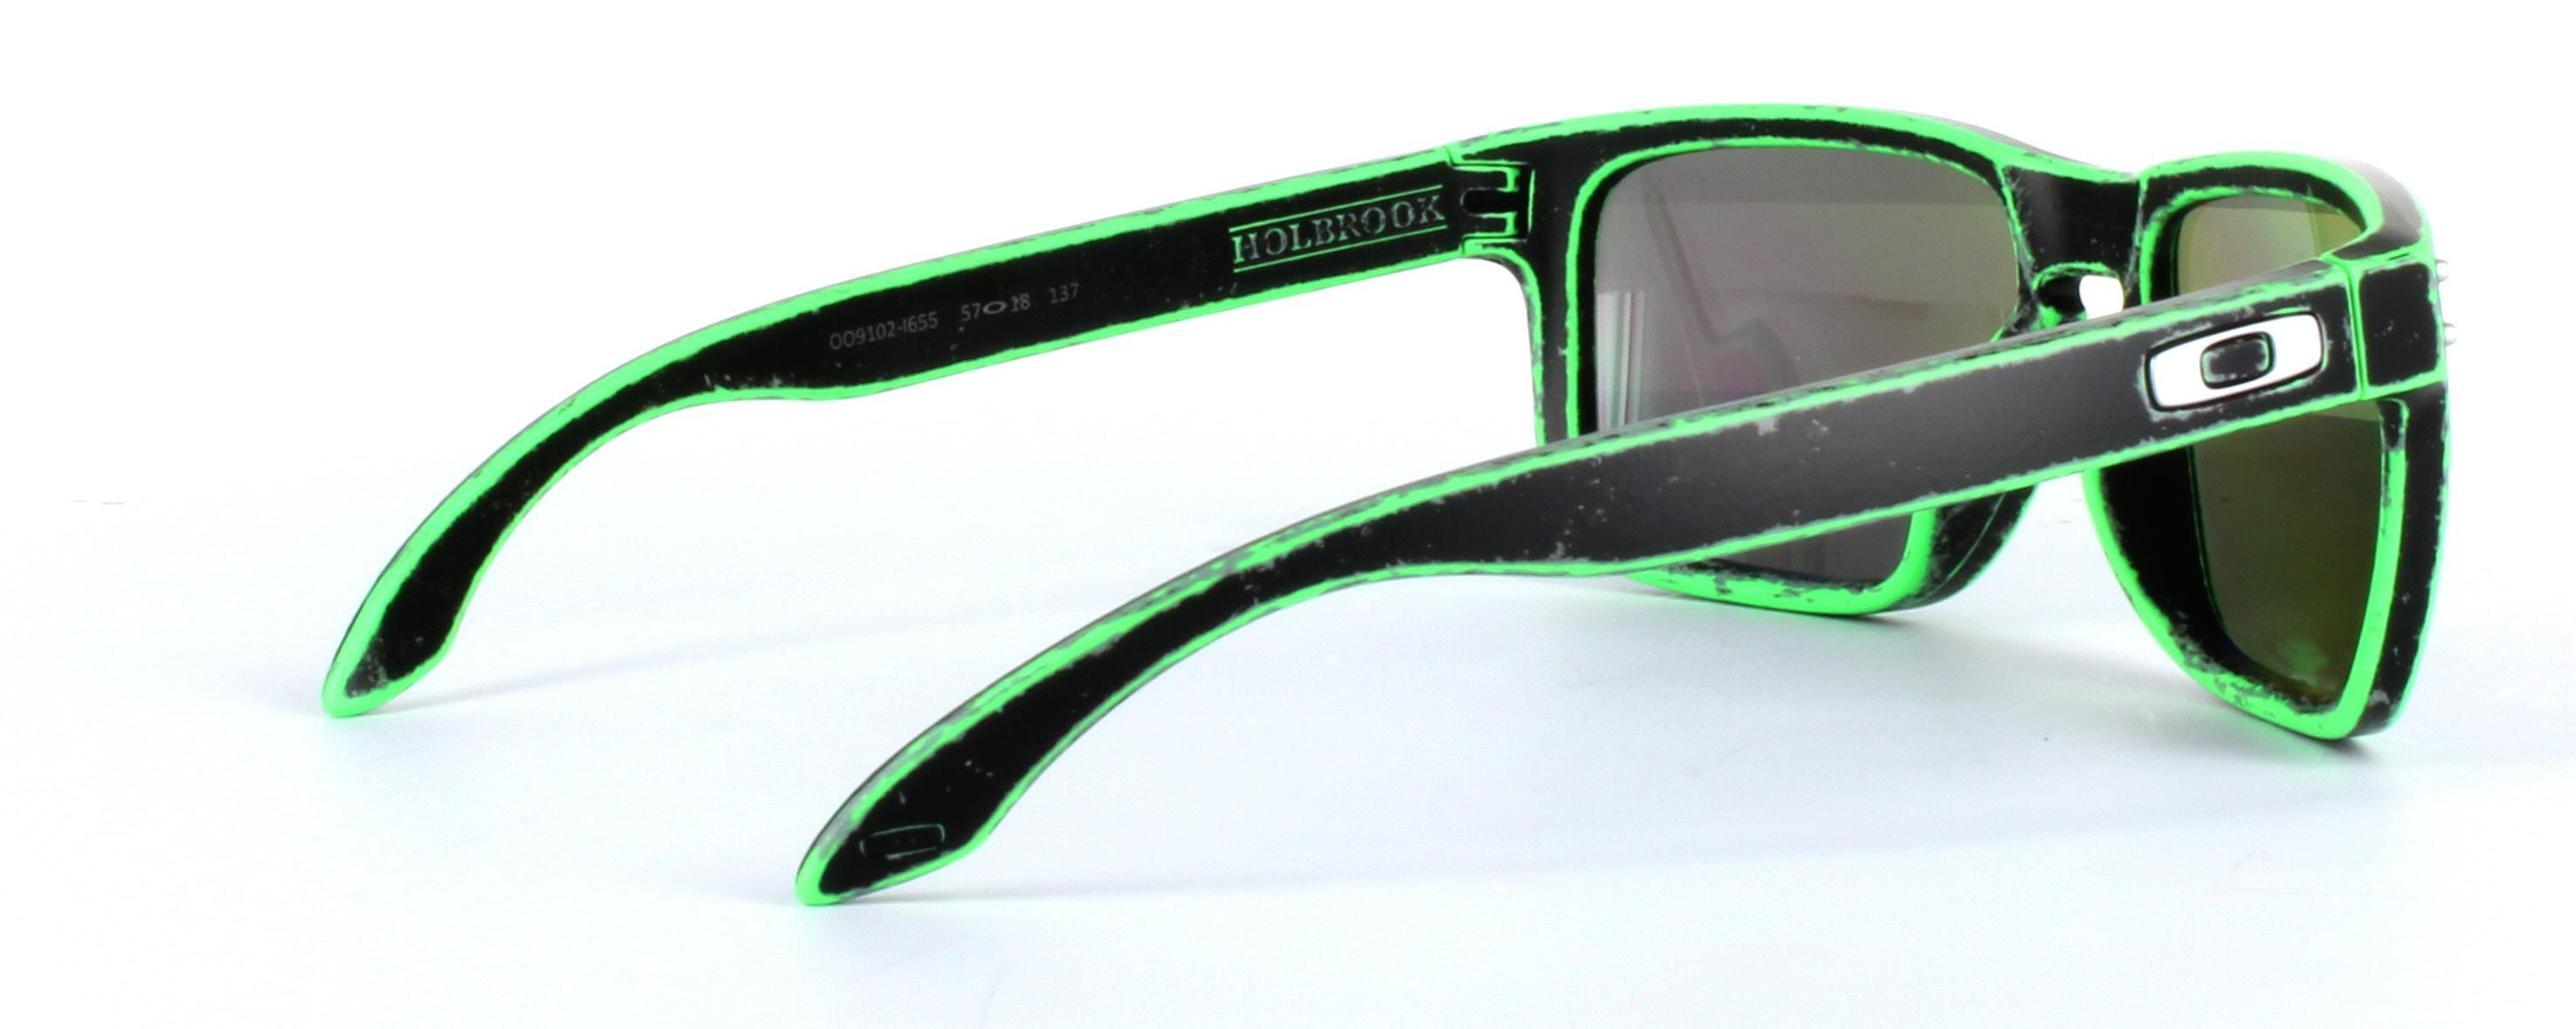 Oakley (9102) Black Full Rim Plastic Sunglasses - Image View 4